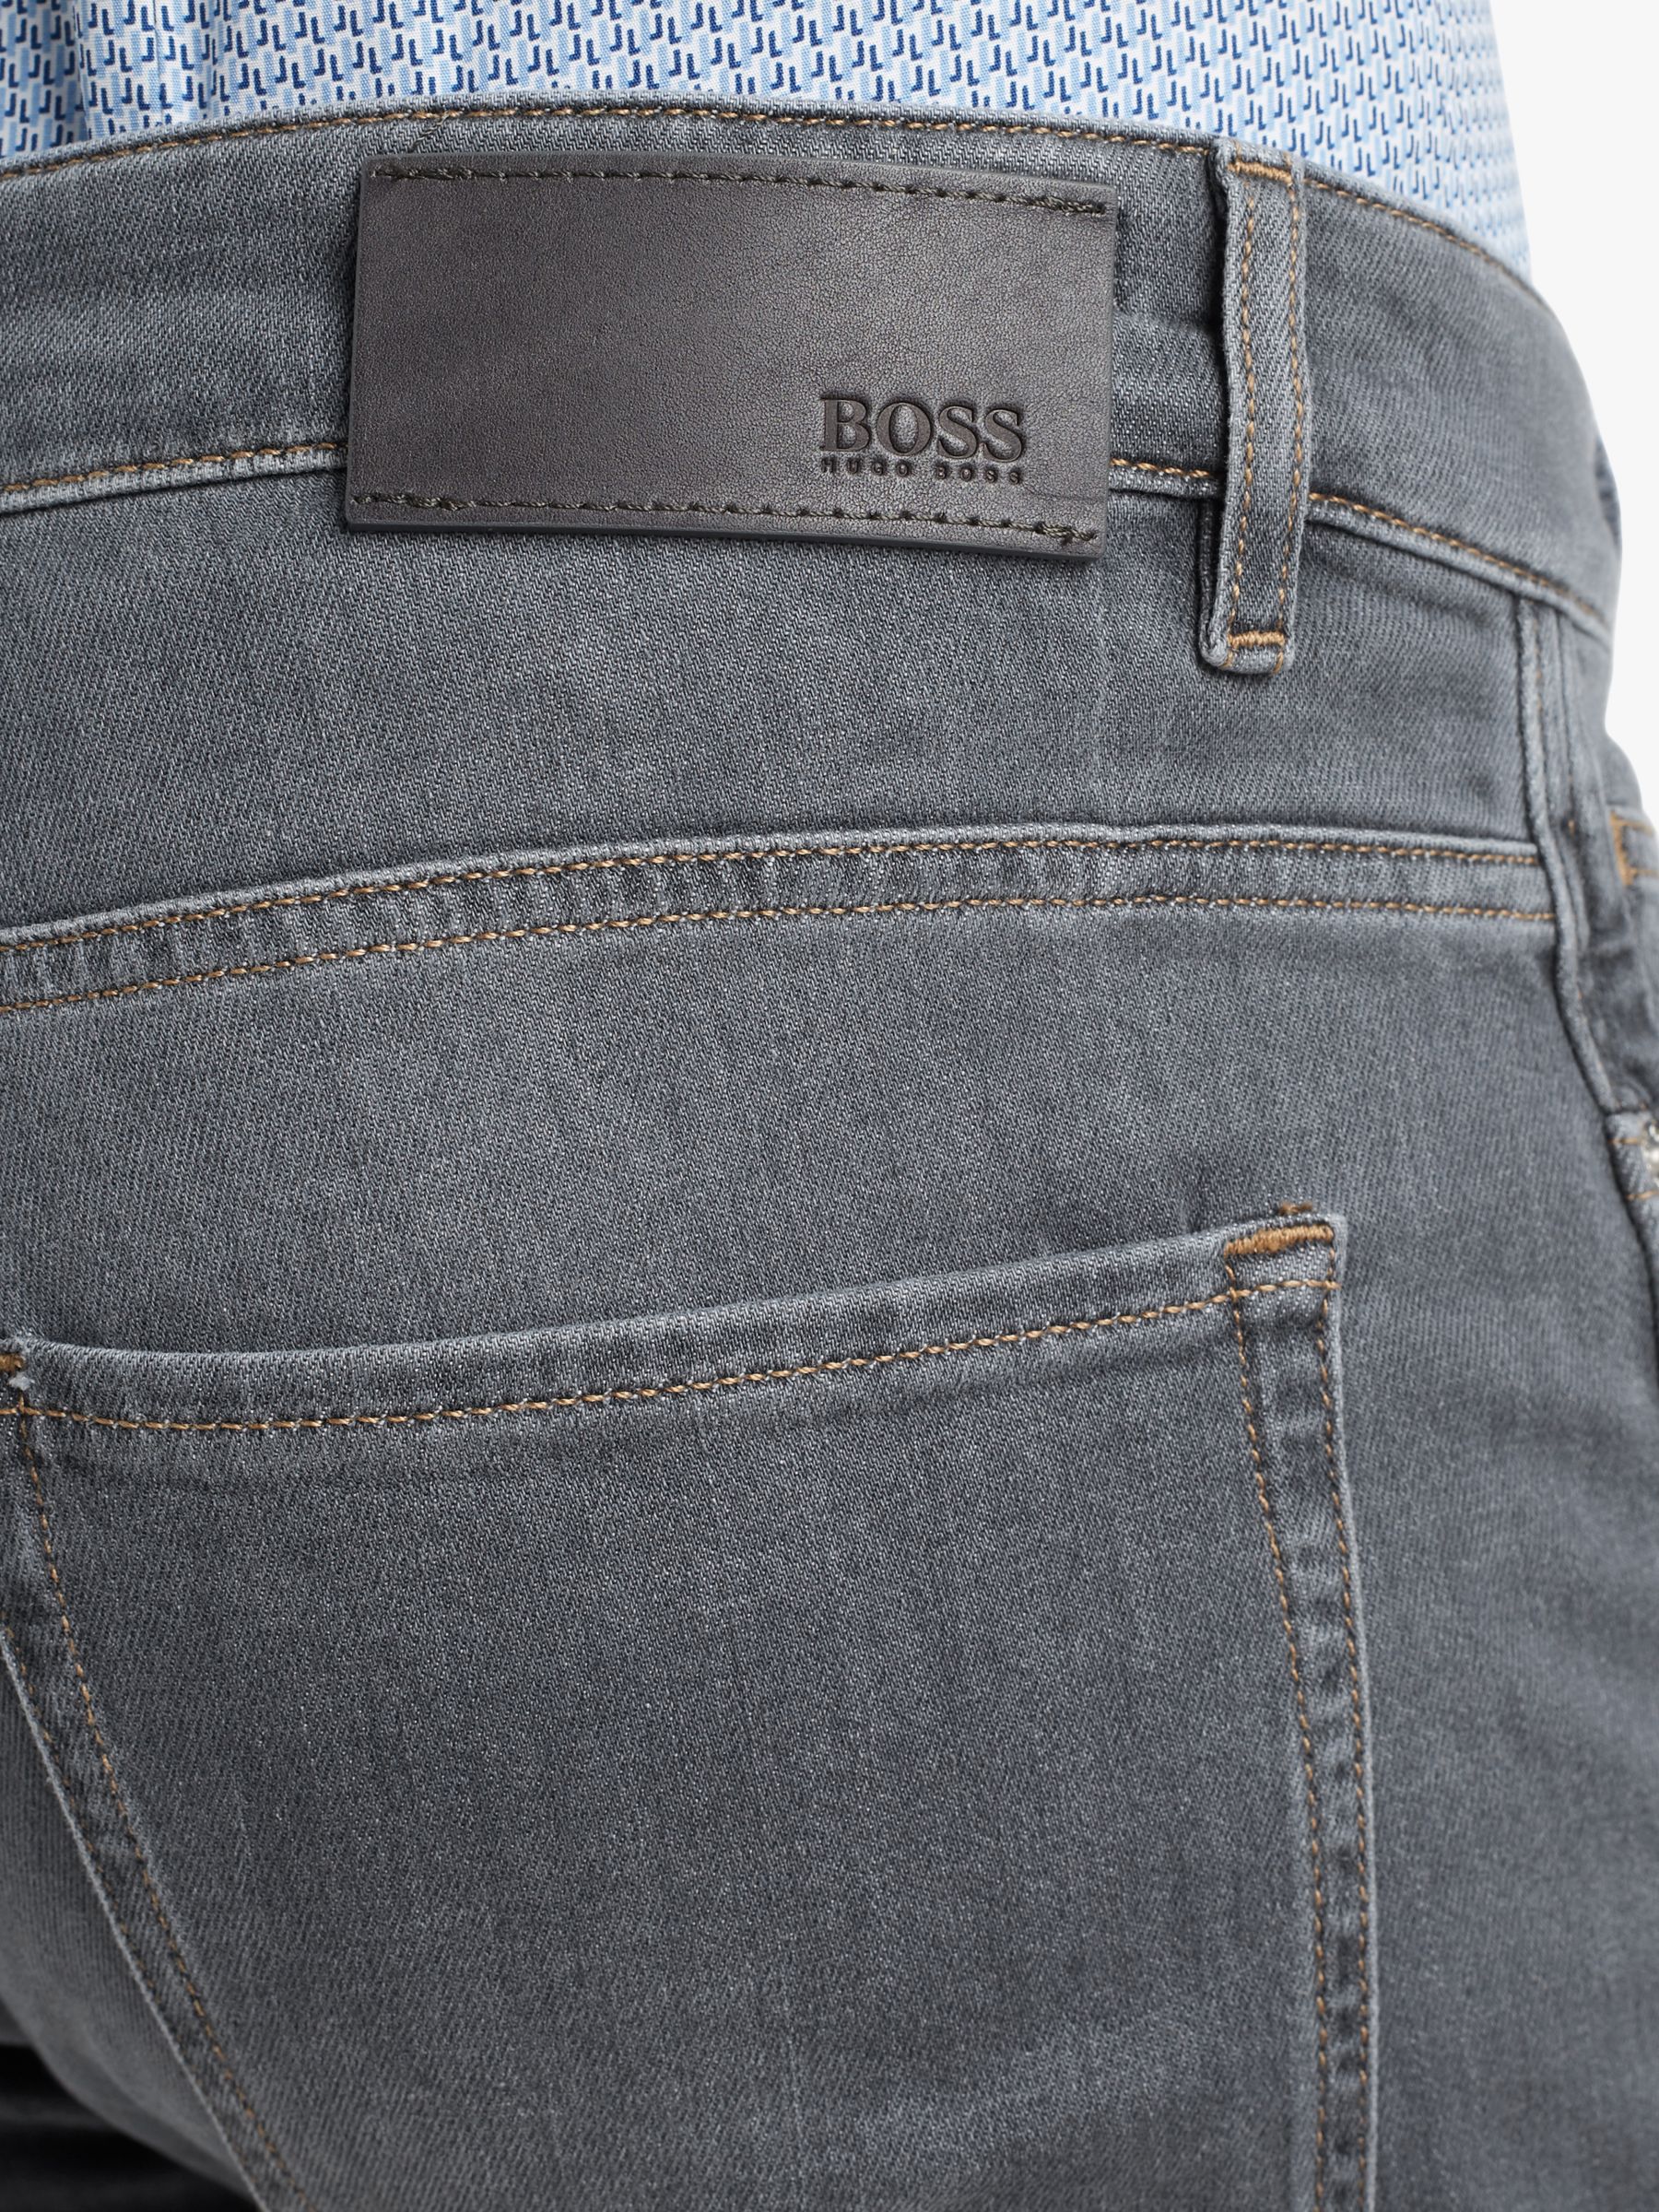 hugo boss delaware jeans slim fit